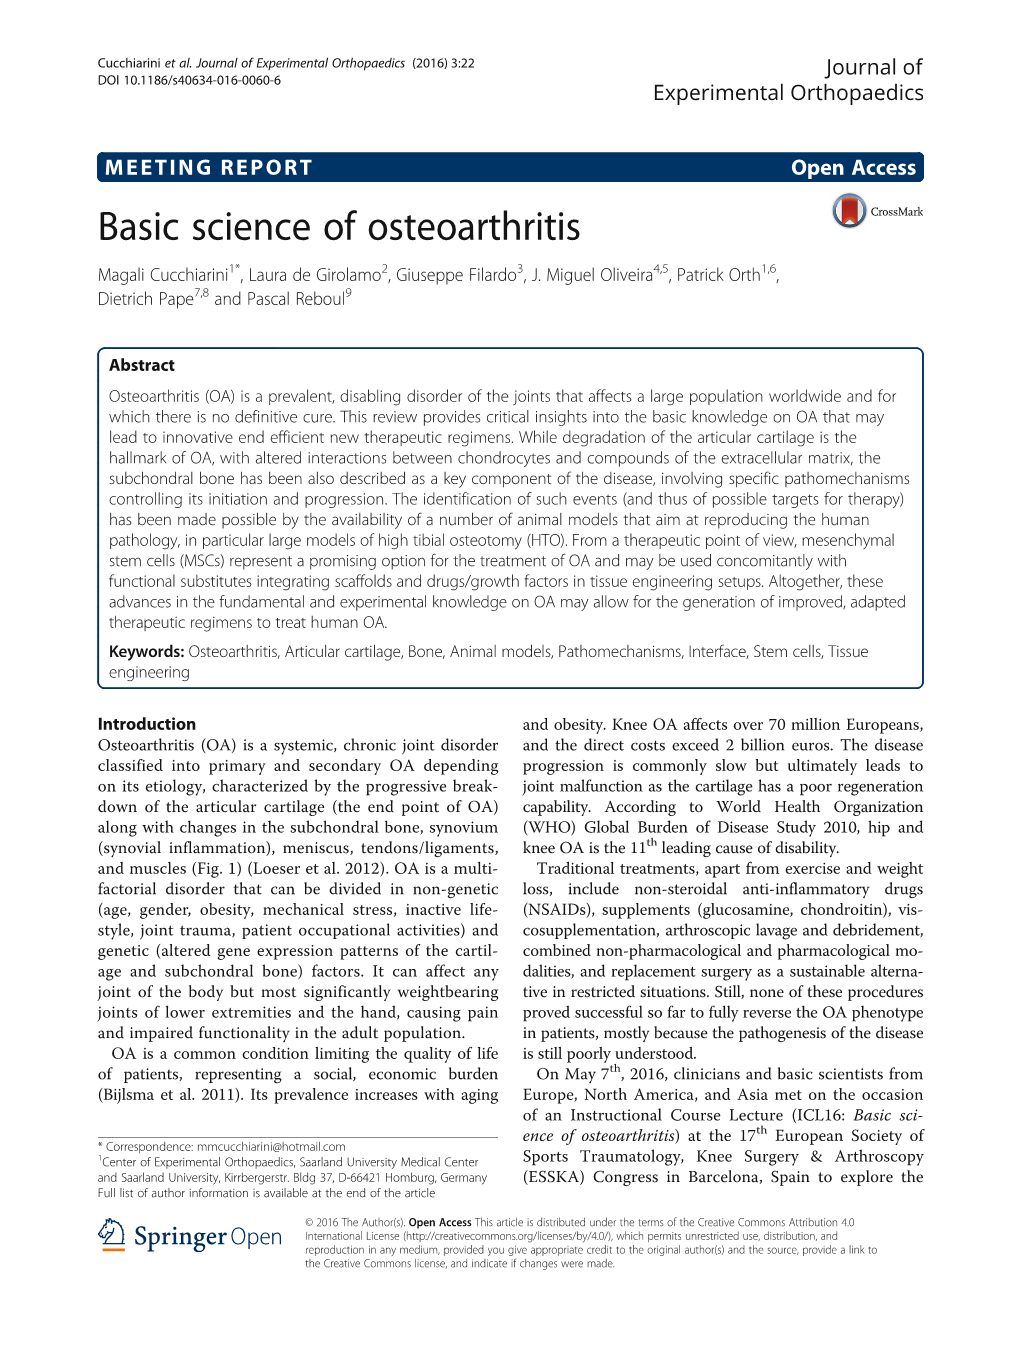 Basic Science of Osteoarthritis Magali Cucchiarini1*, Laura De Girolamo2, Giuseppe Filardo3, J